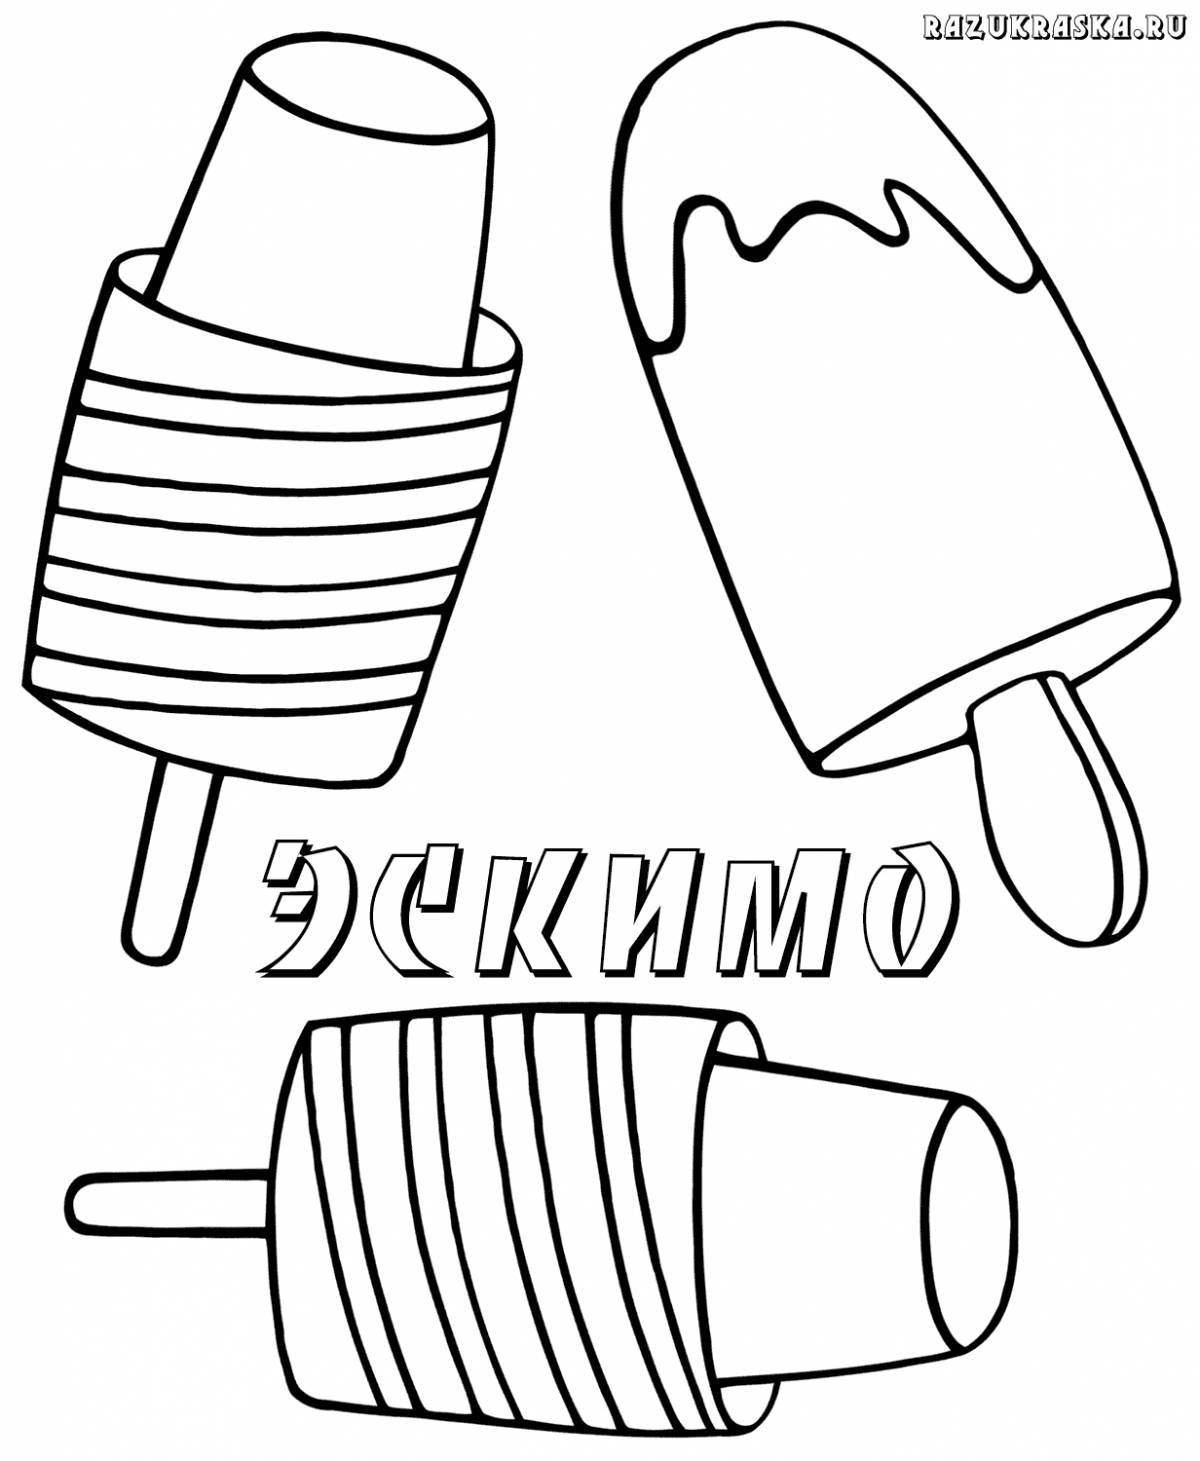 Буква эскимо. Эскимо раскраска. Эскимо раскраска для детей. Раскраска мороженое. Раскраска мороженое эскимо.